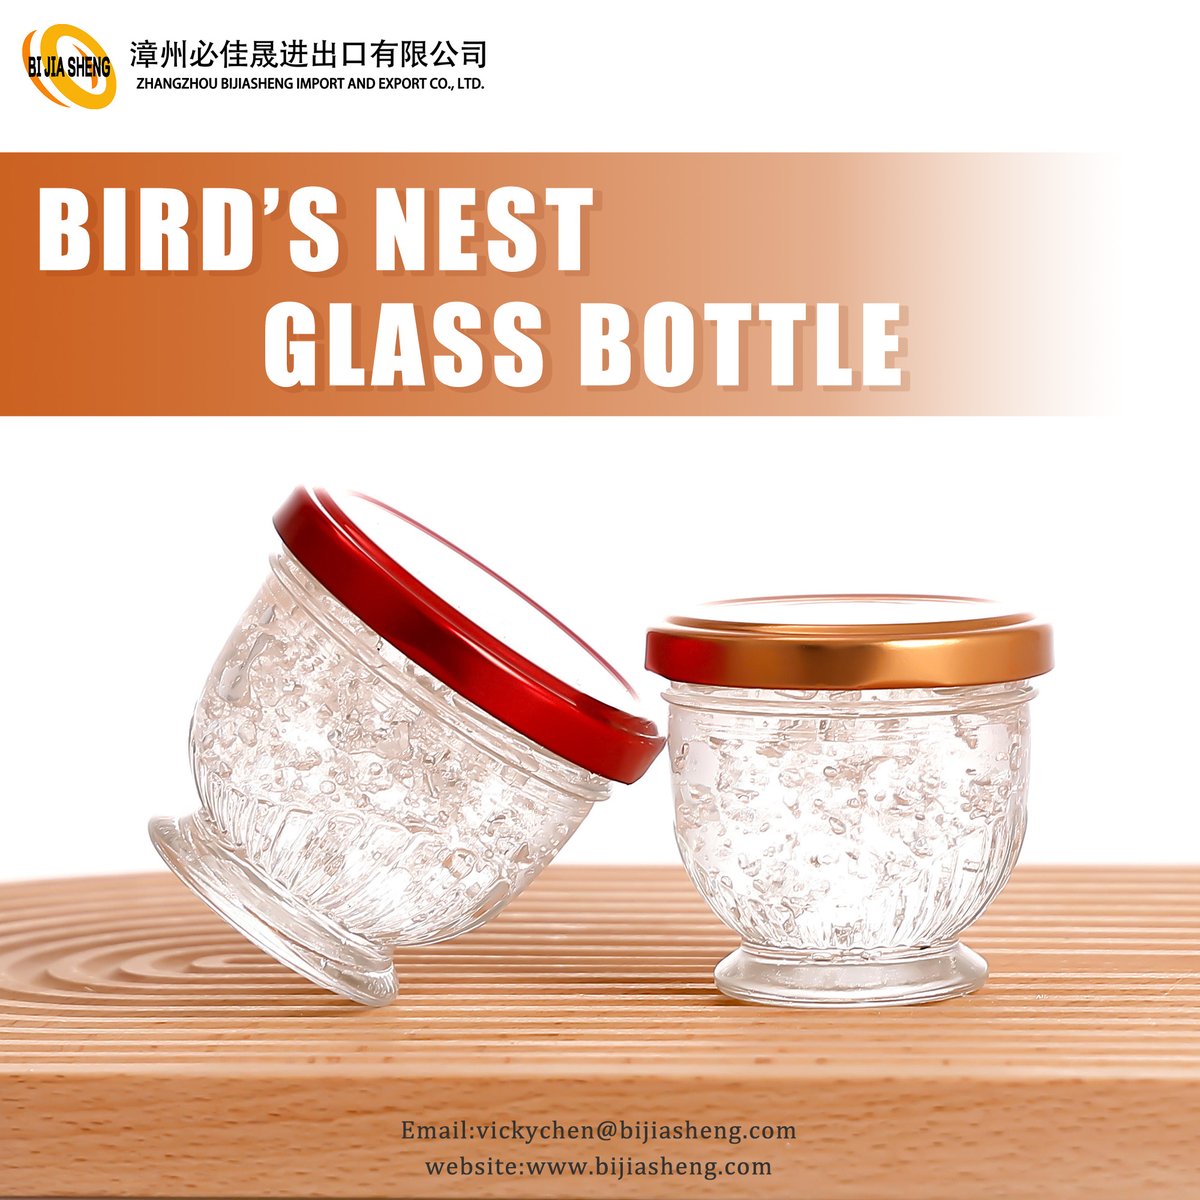 The latest bird's nest glass bottle!🥳🥳🥳
The elegant bottle design and exquisite bottle cap highlight the high-end quality of your bird's nest products. ✨

#glassbottle #Packaging #BirdsNest #tổyến #yếnsào #lọthuỷtinh #baobìyếnsàoquýphá #yếntổchalo #hũyếntổ